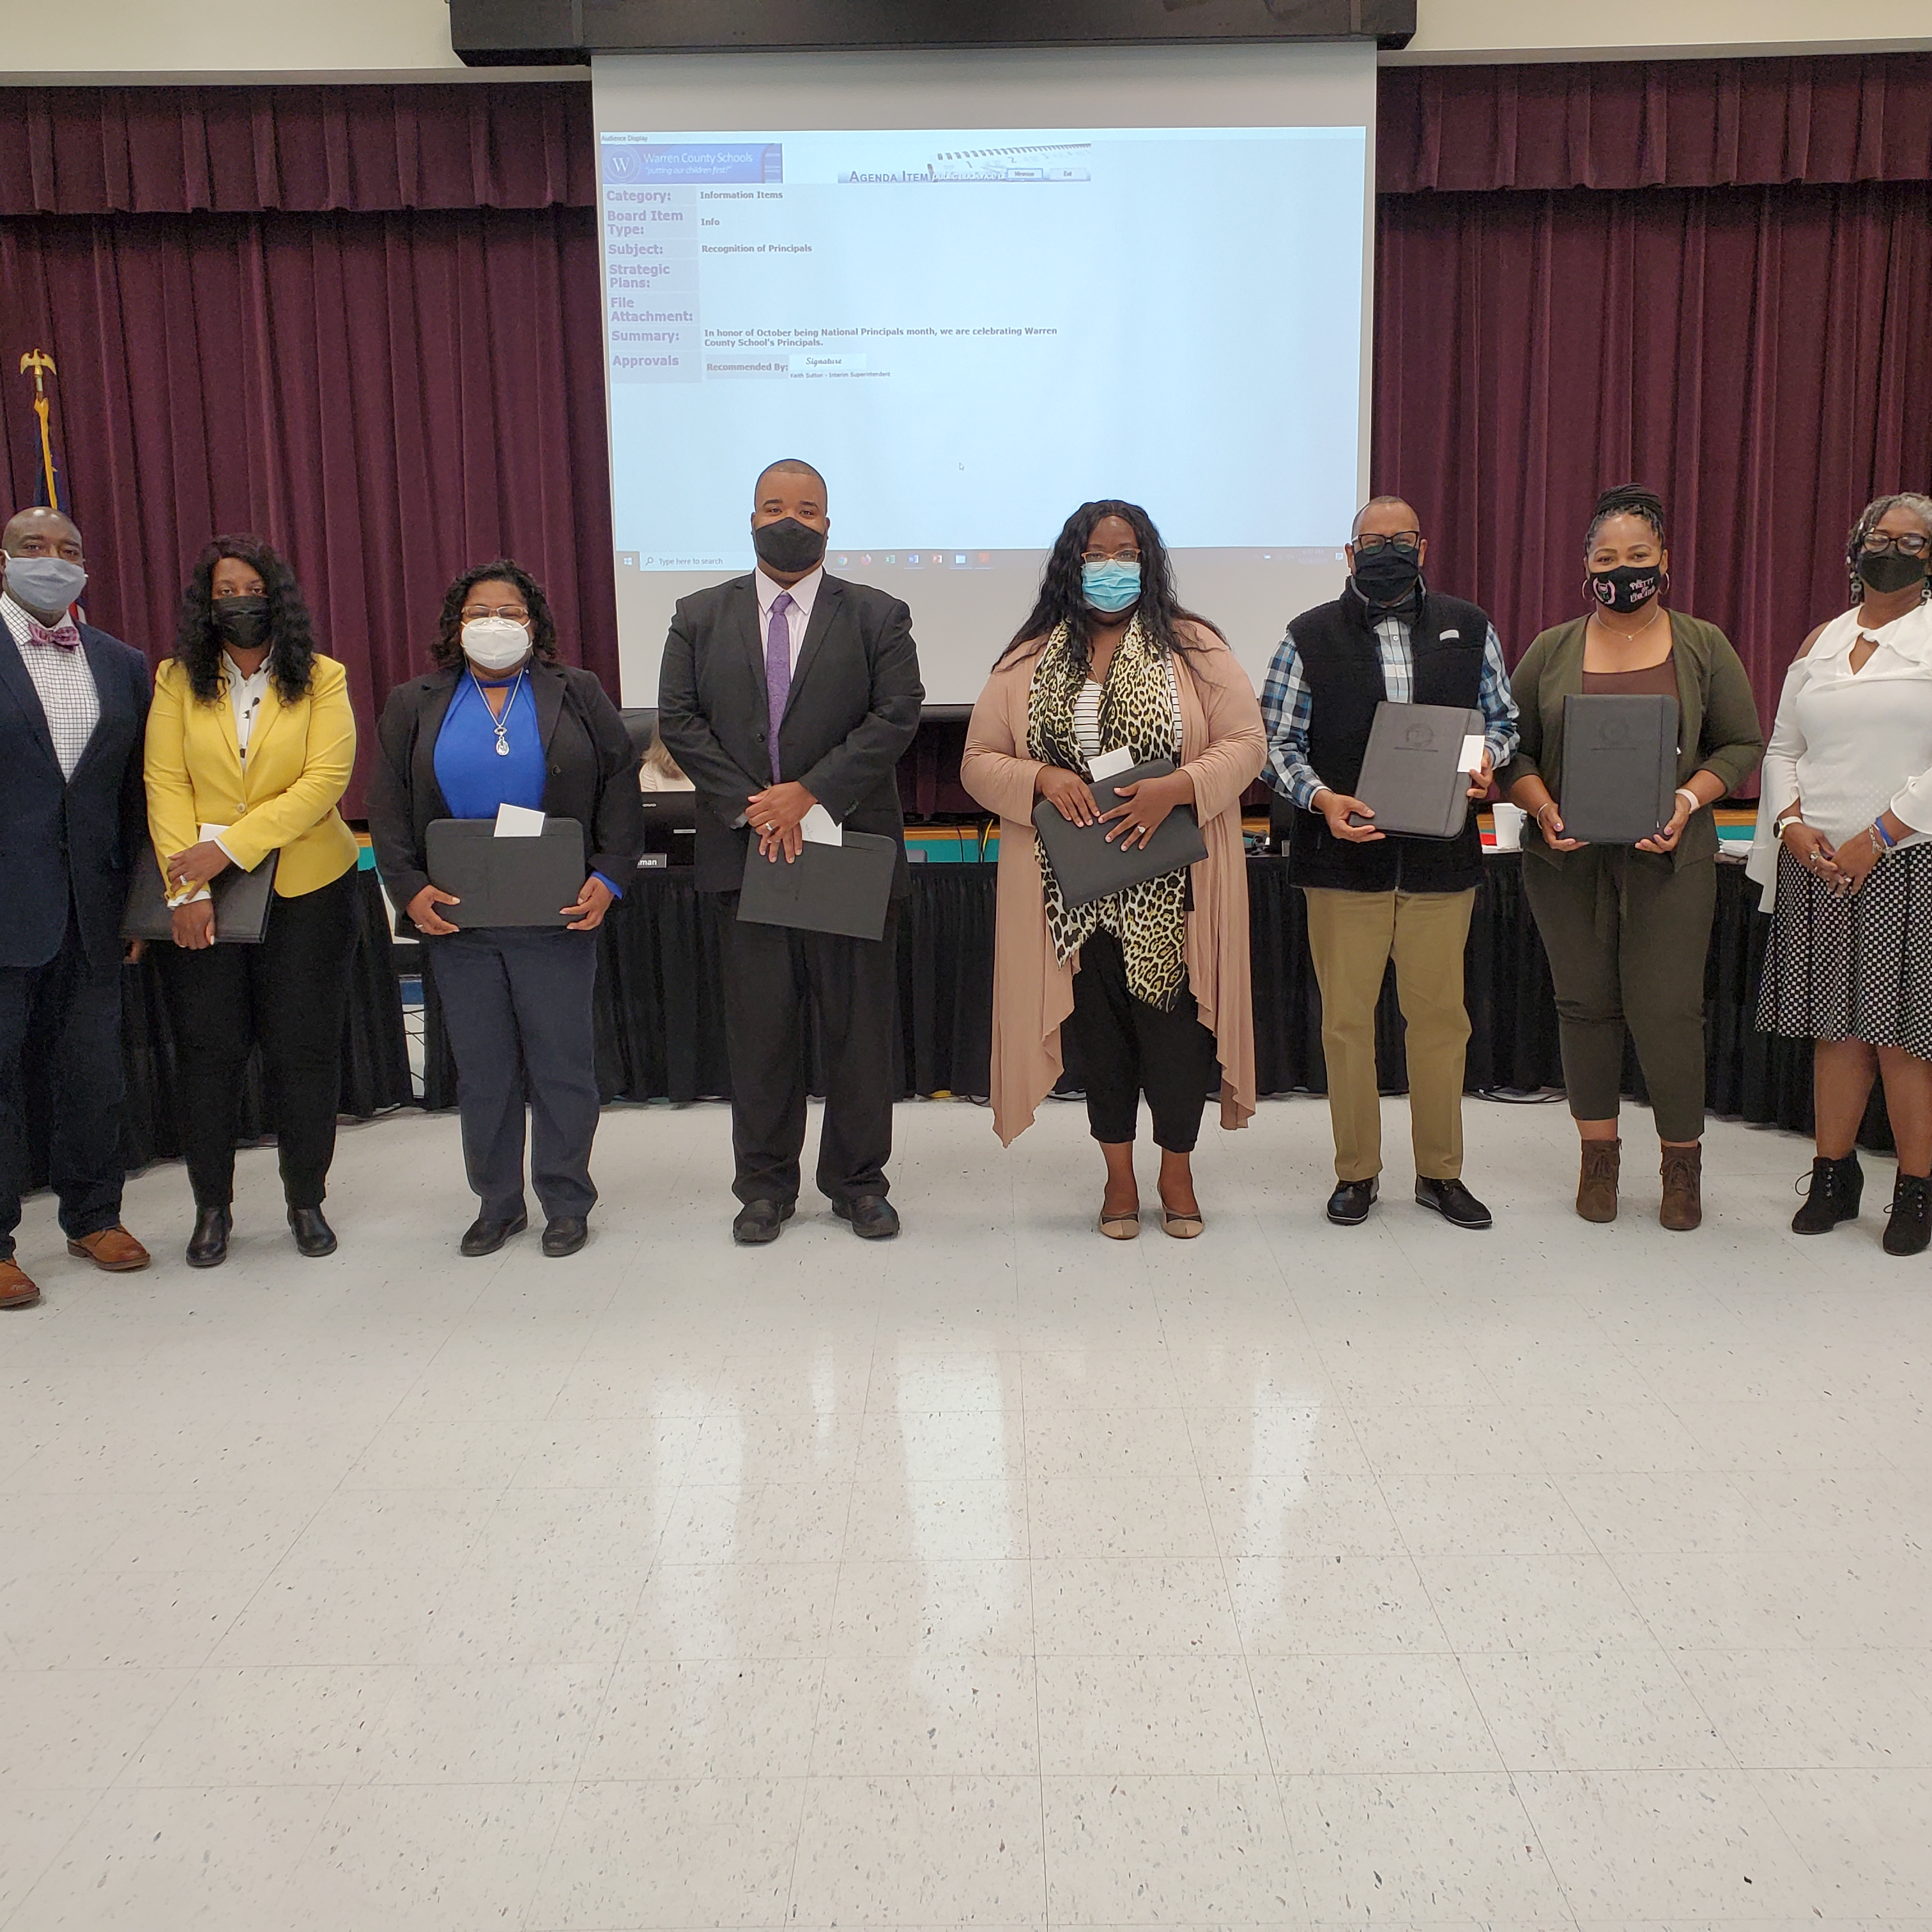 Principals honored at a School Board meeting